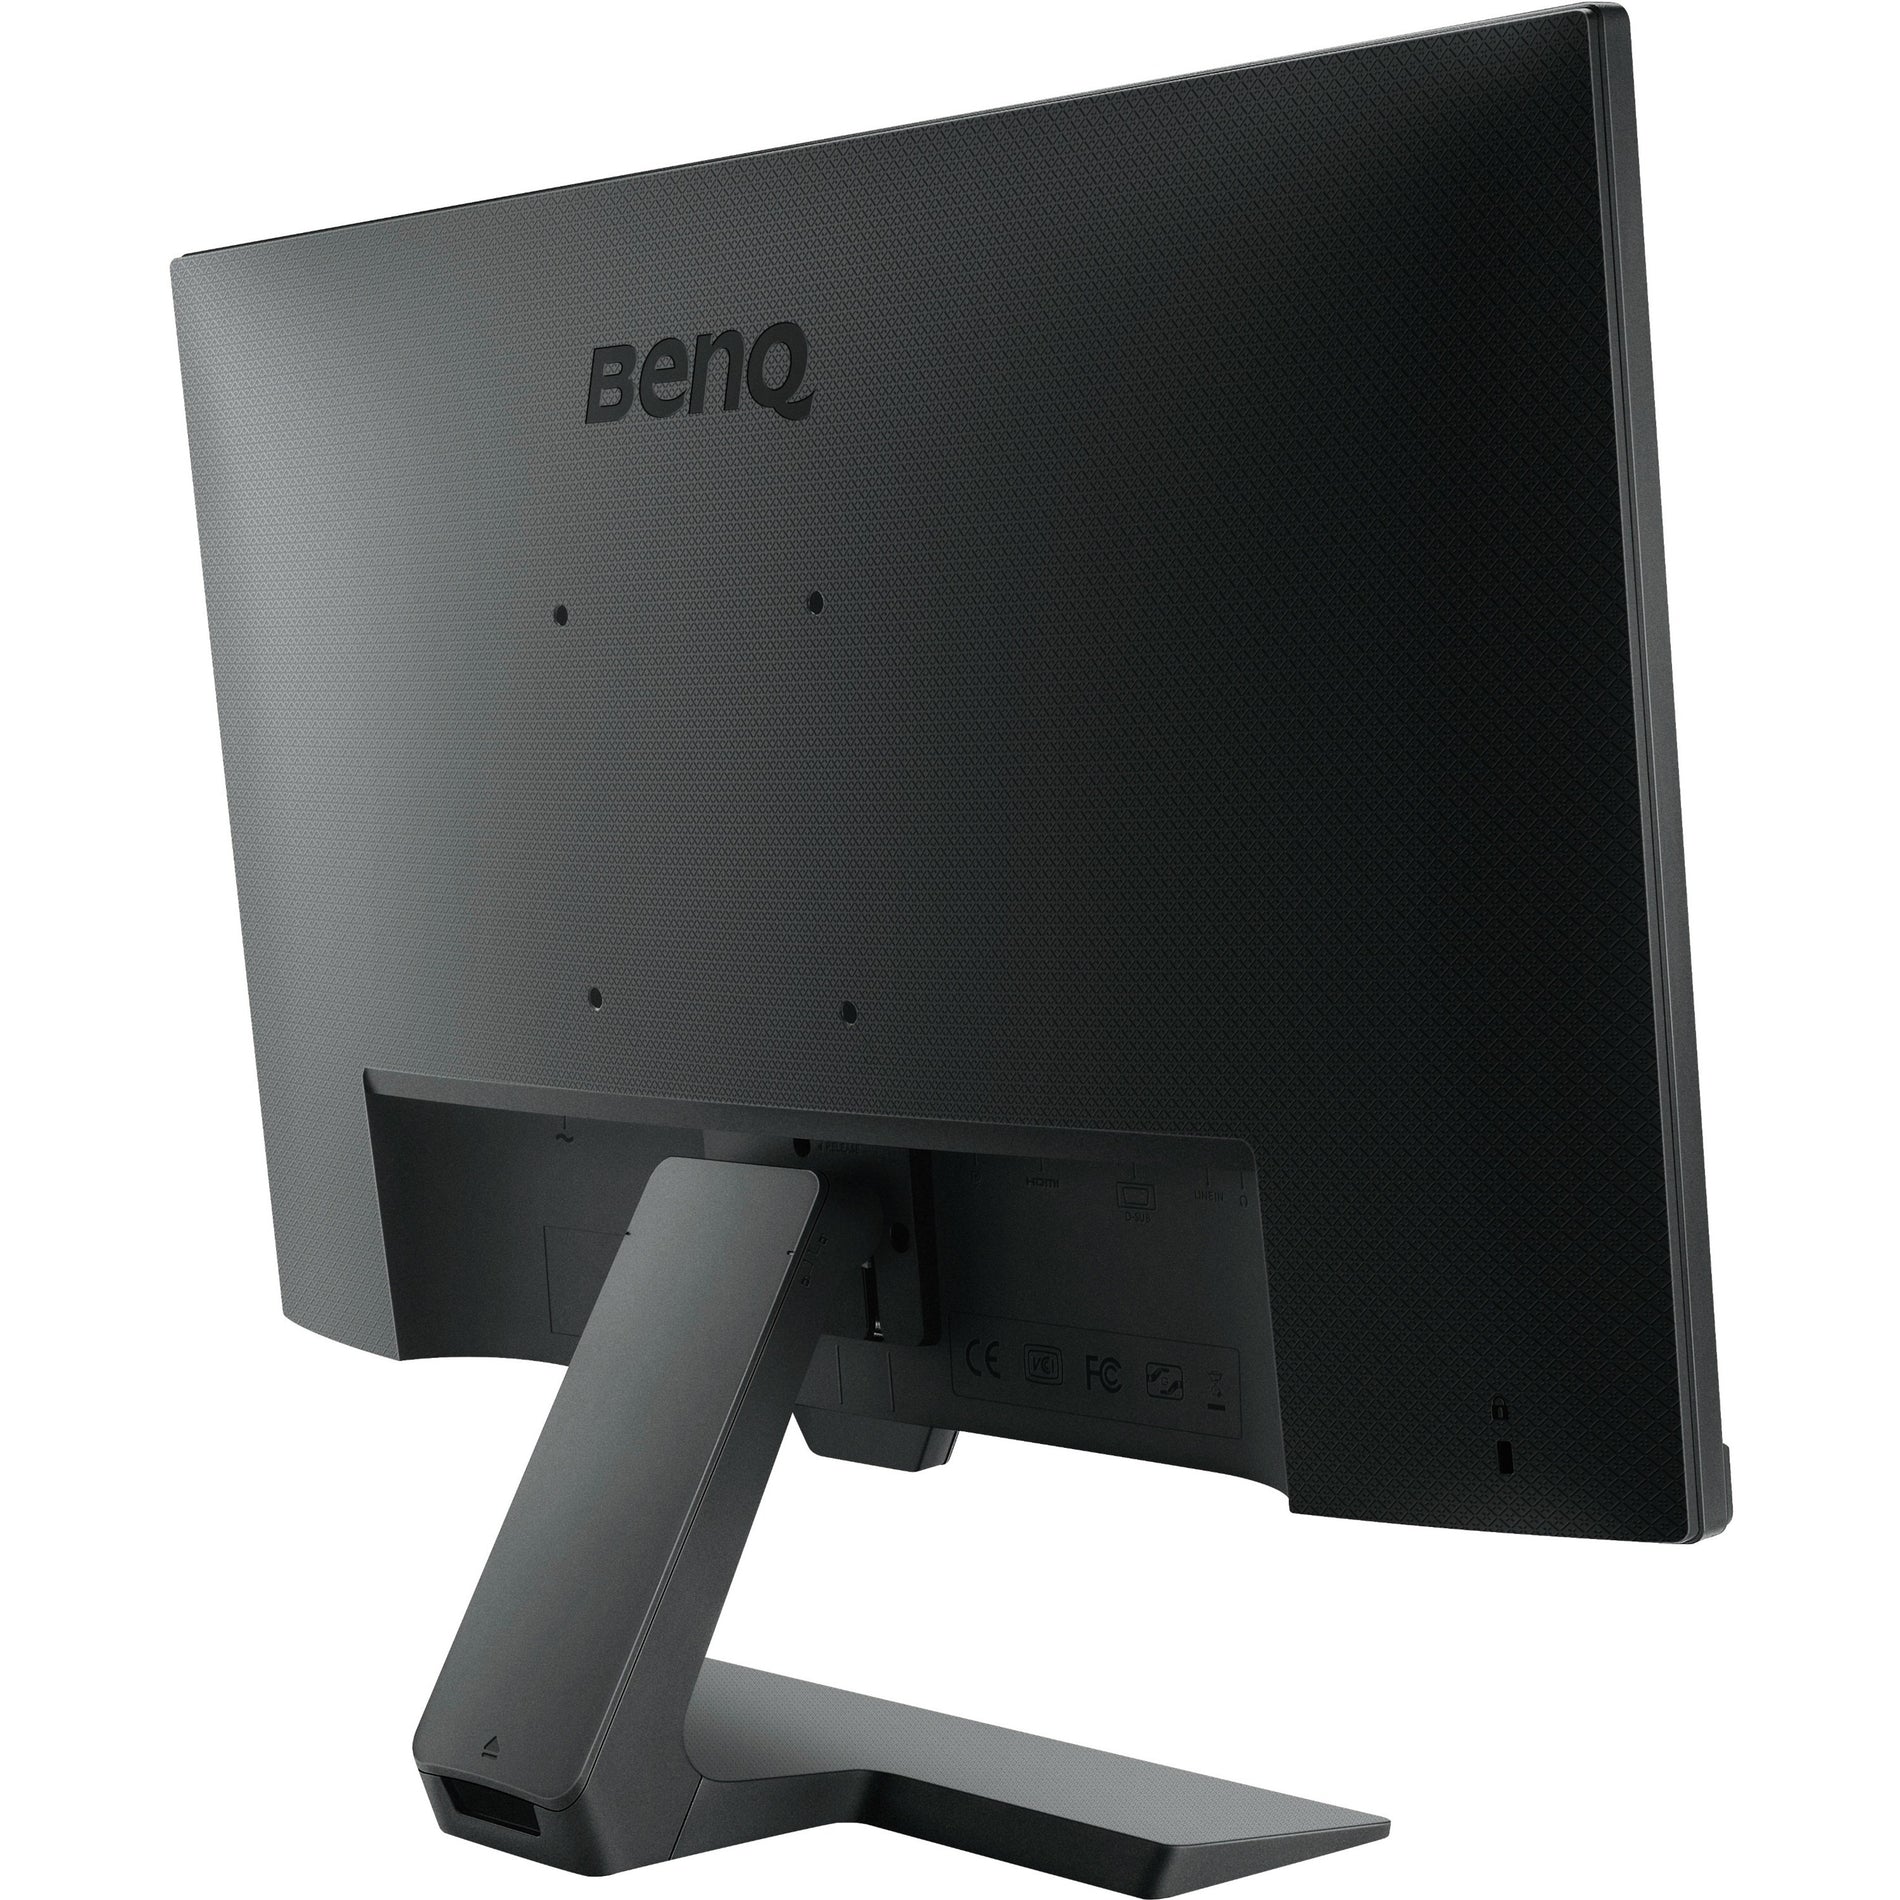 BenQ GW2480 Stylish Monitor with 23.8 inch 1080p Eye-care Technology, Full HD LCD Monitor - 16:9 - Black